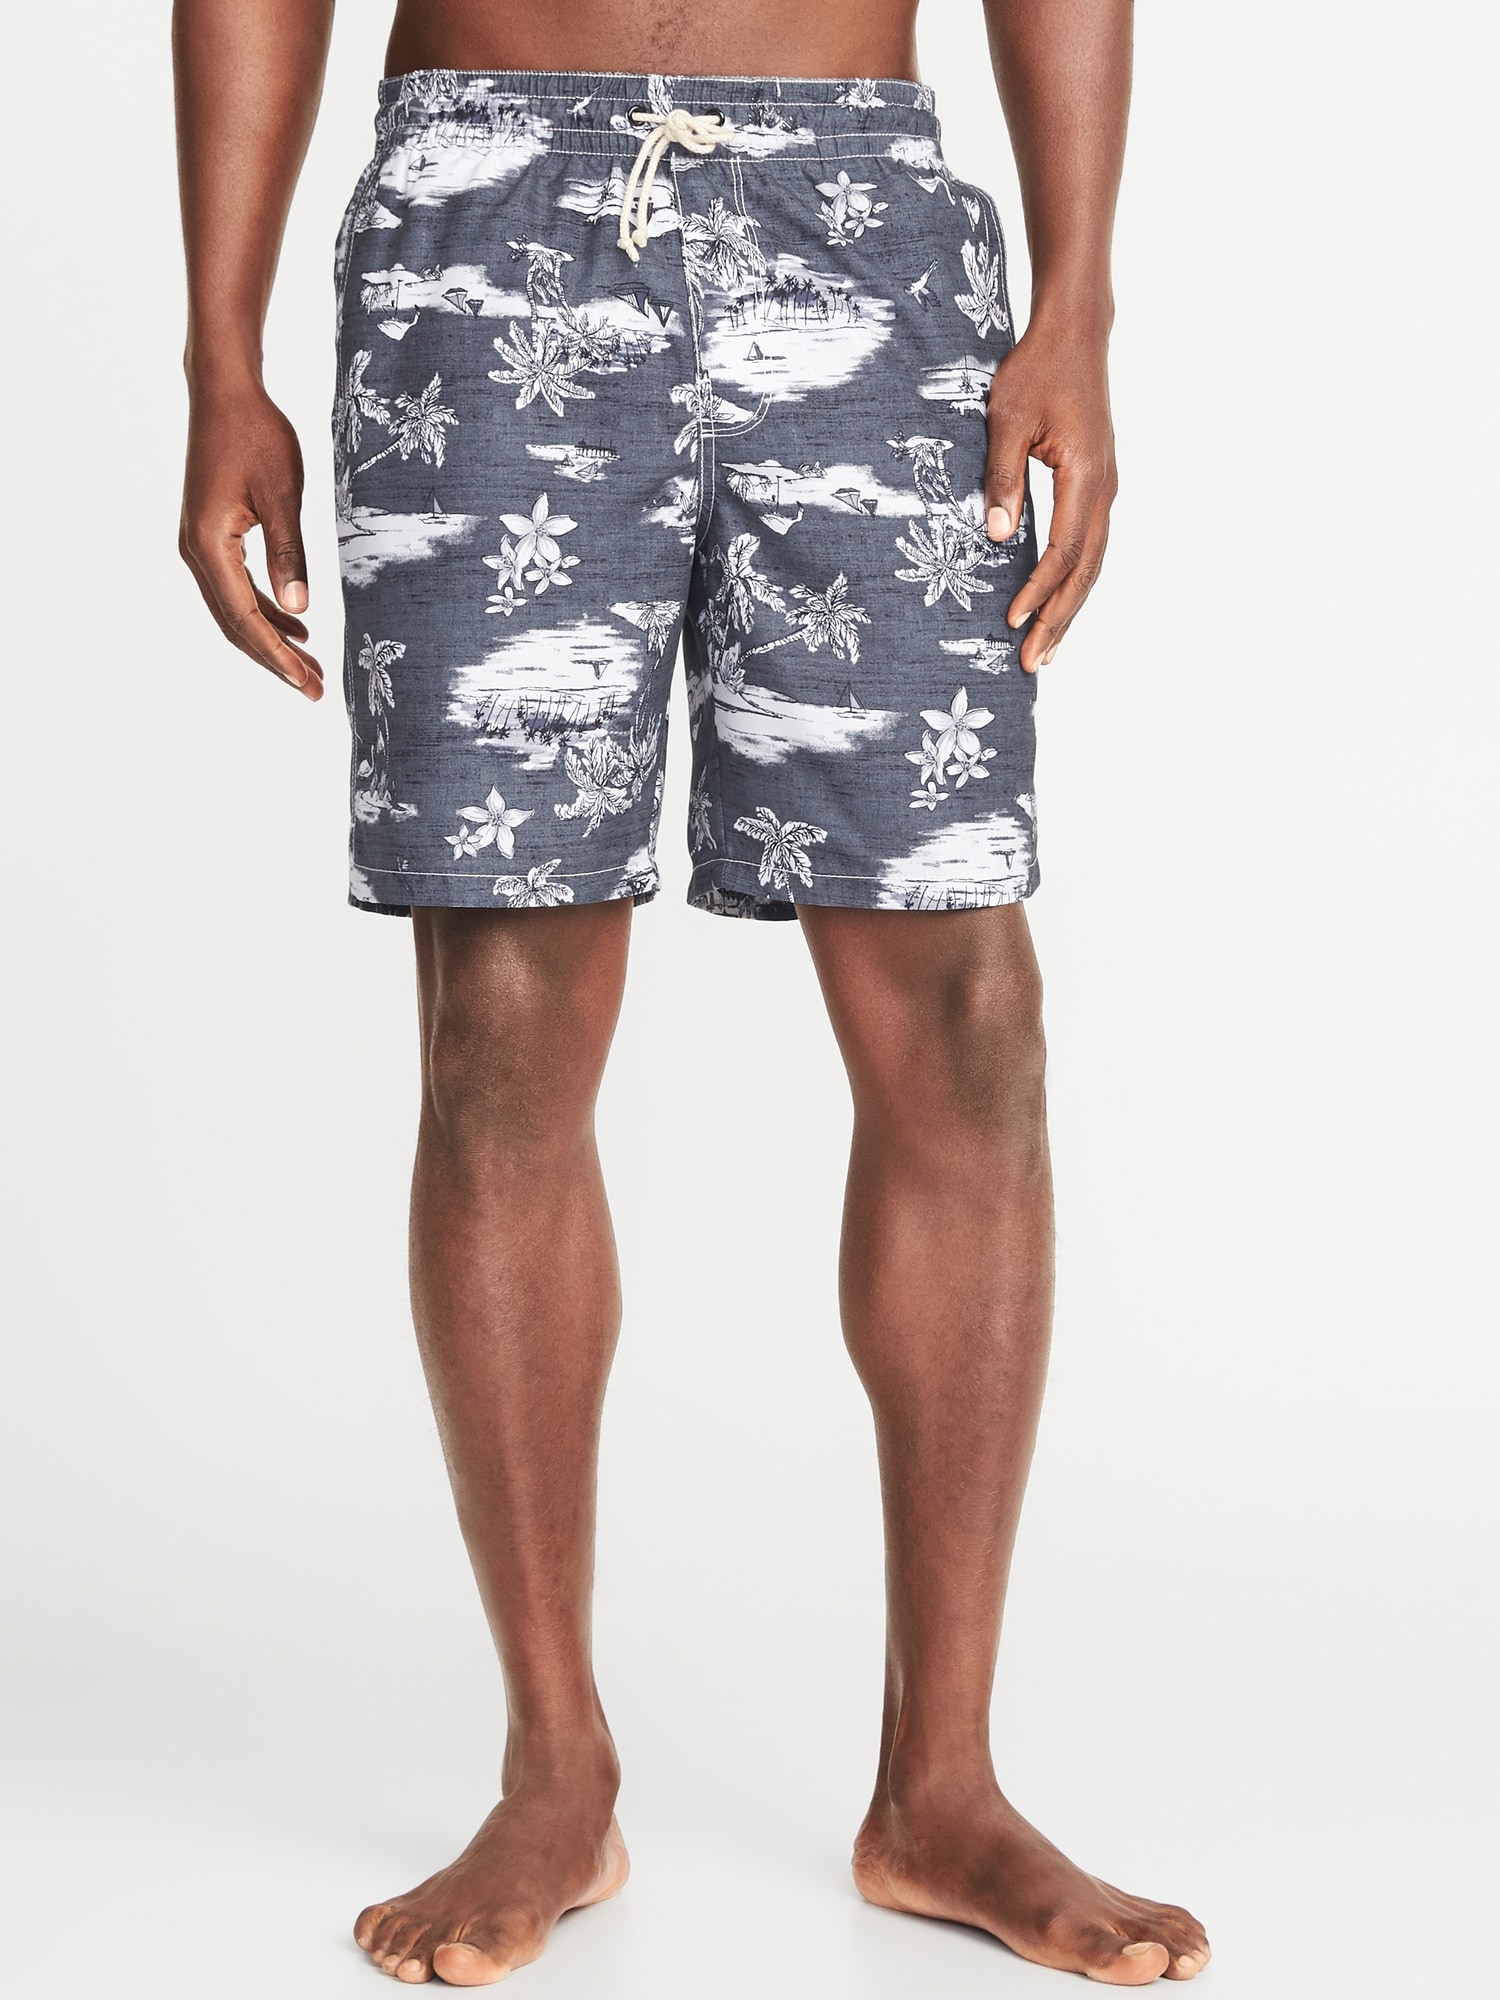 Printed Swim Trunks for Men - 8-inch inseam | Old Navy